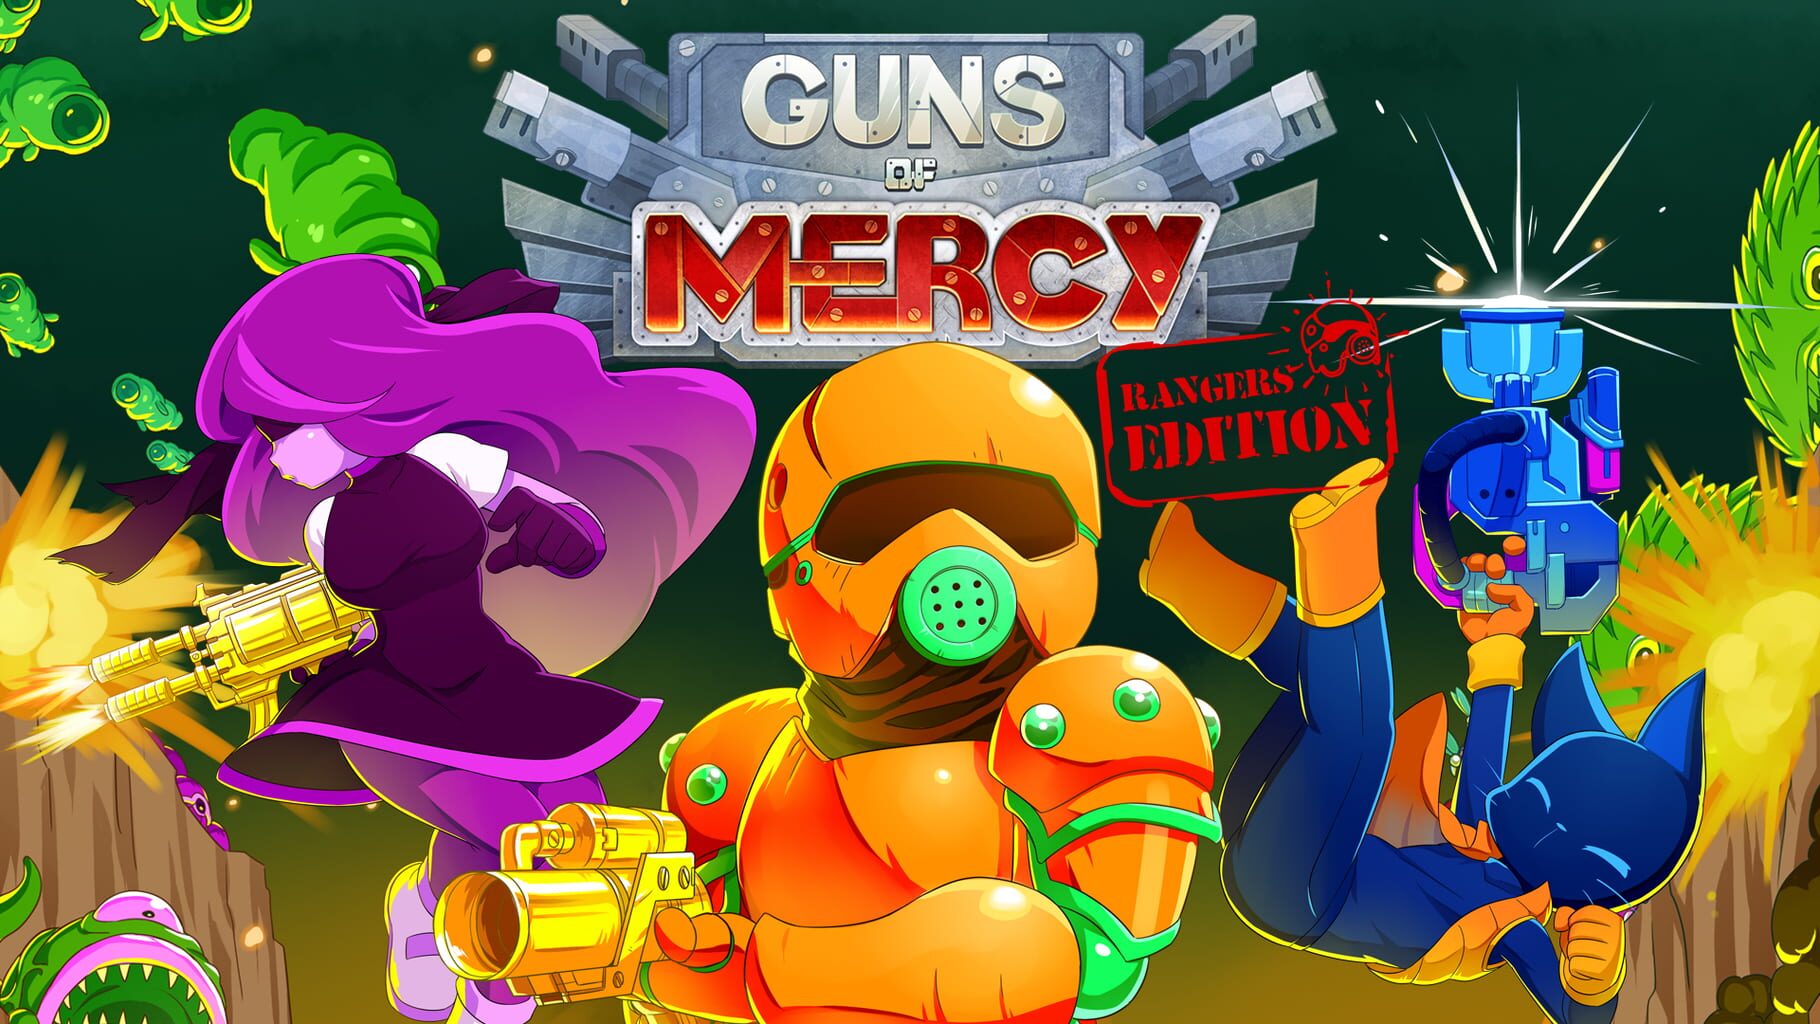 Guns of Mercy: Rangers Edition artwork